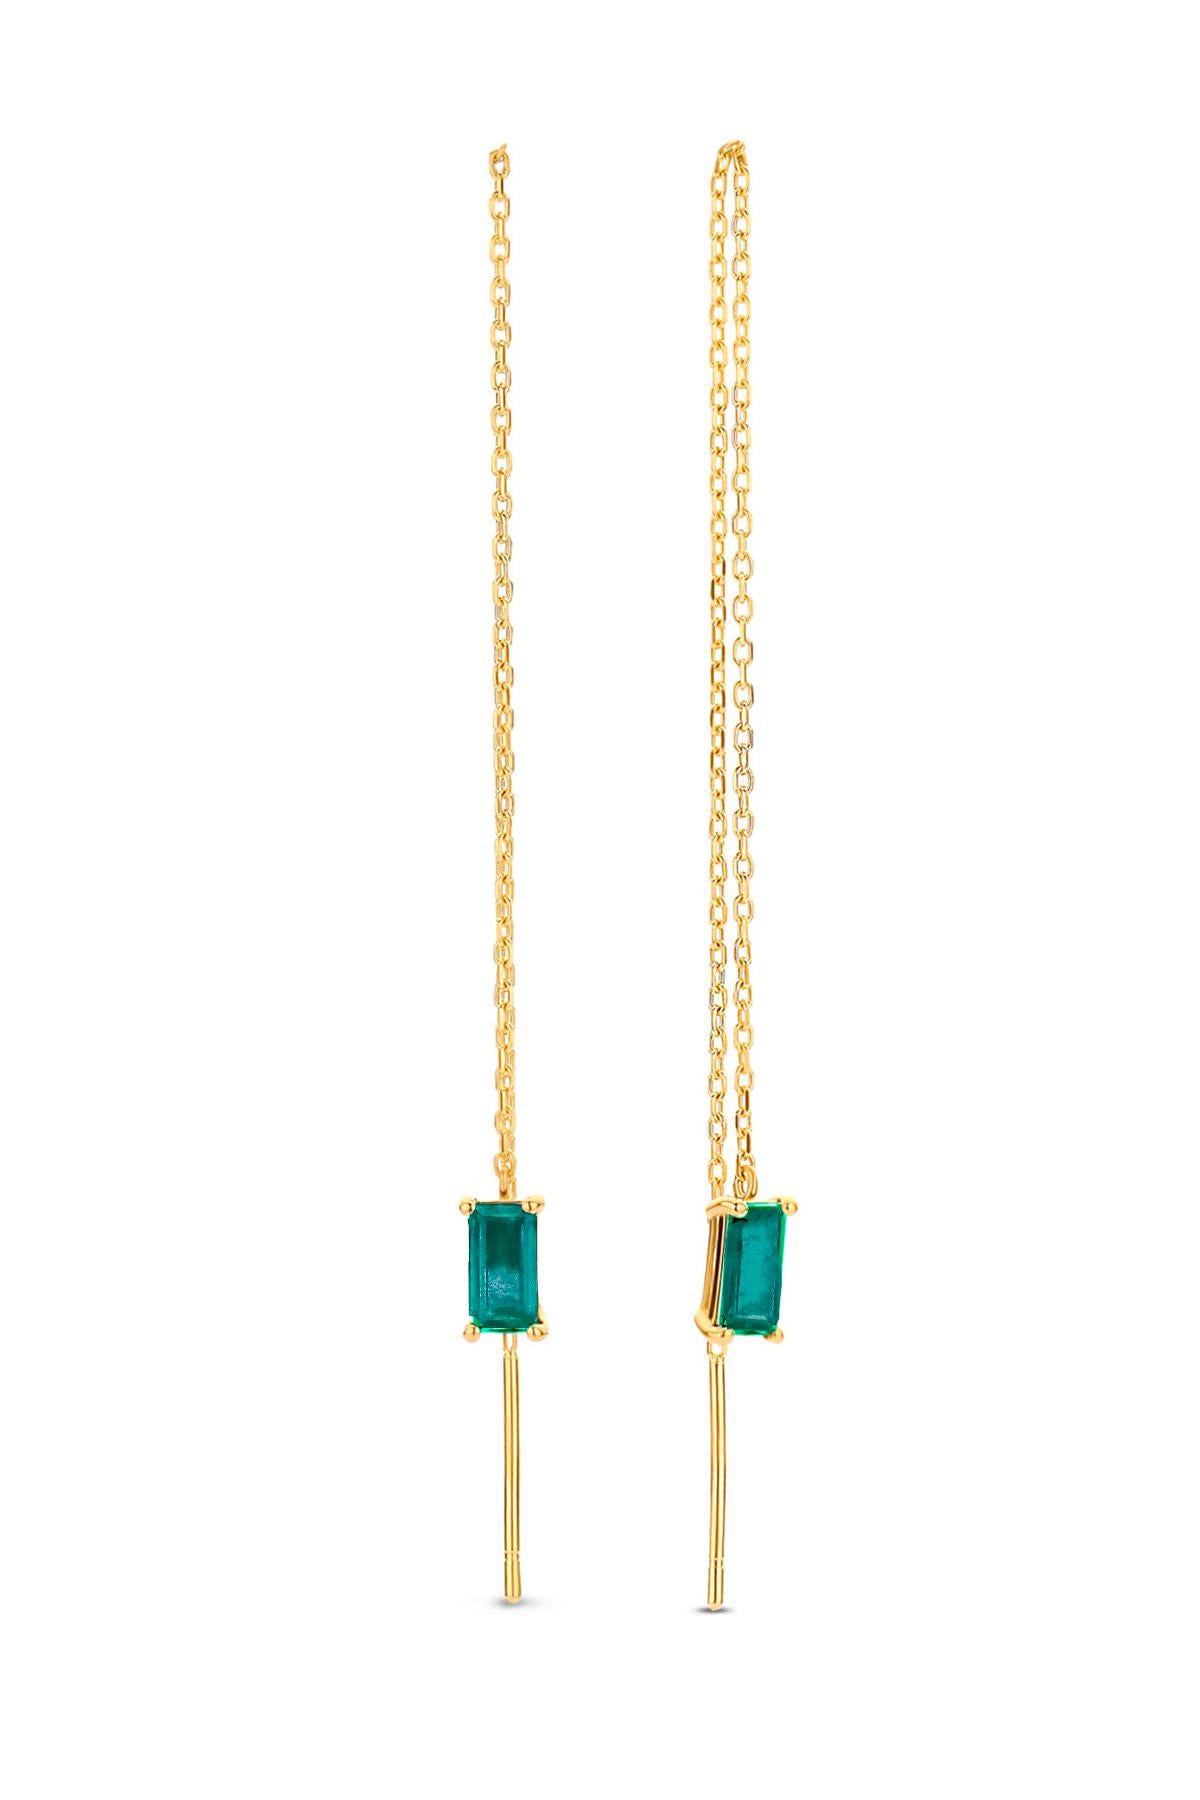 Genuine emerald gold earrings. 14k solid gold drop earrings with emeralds.  Natural emeralds solid gold earrings. Chain earrings. Baguette Earrings Dangle. Delicate Solid Gold chain Earrings.  14K Solid Gold Threader Chain Earrings

Metal: 14 karat